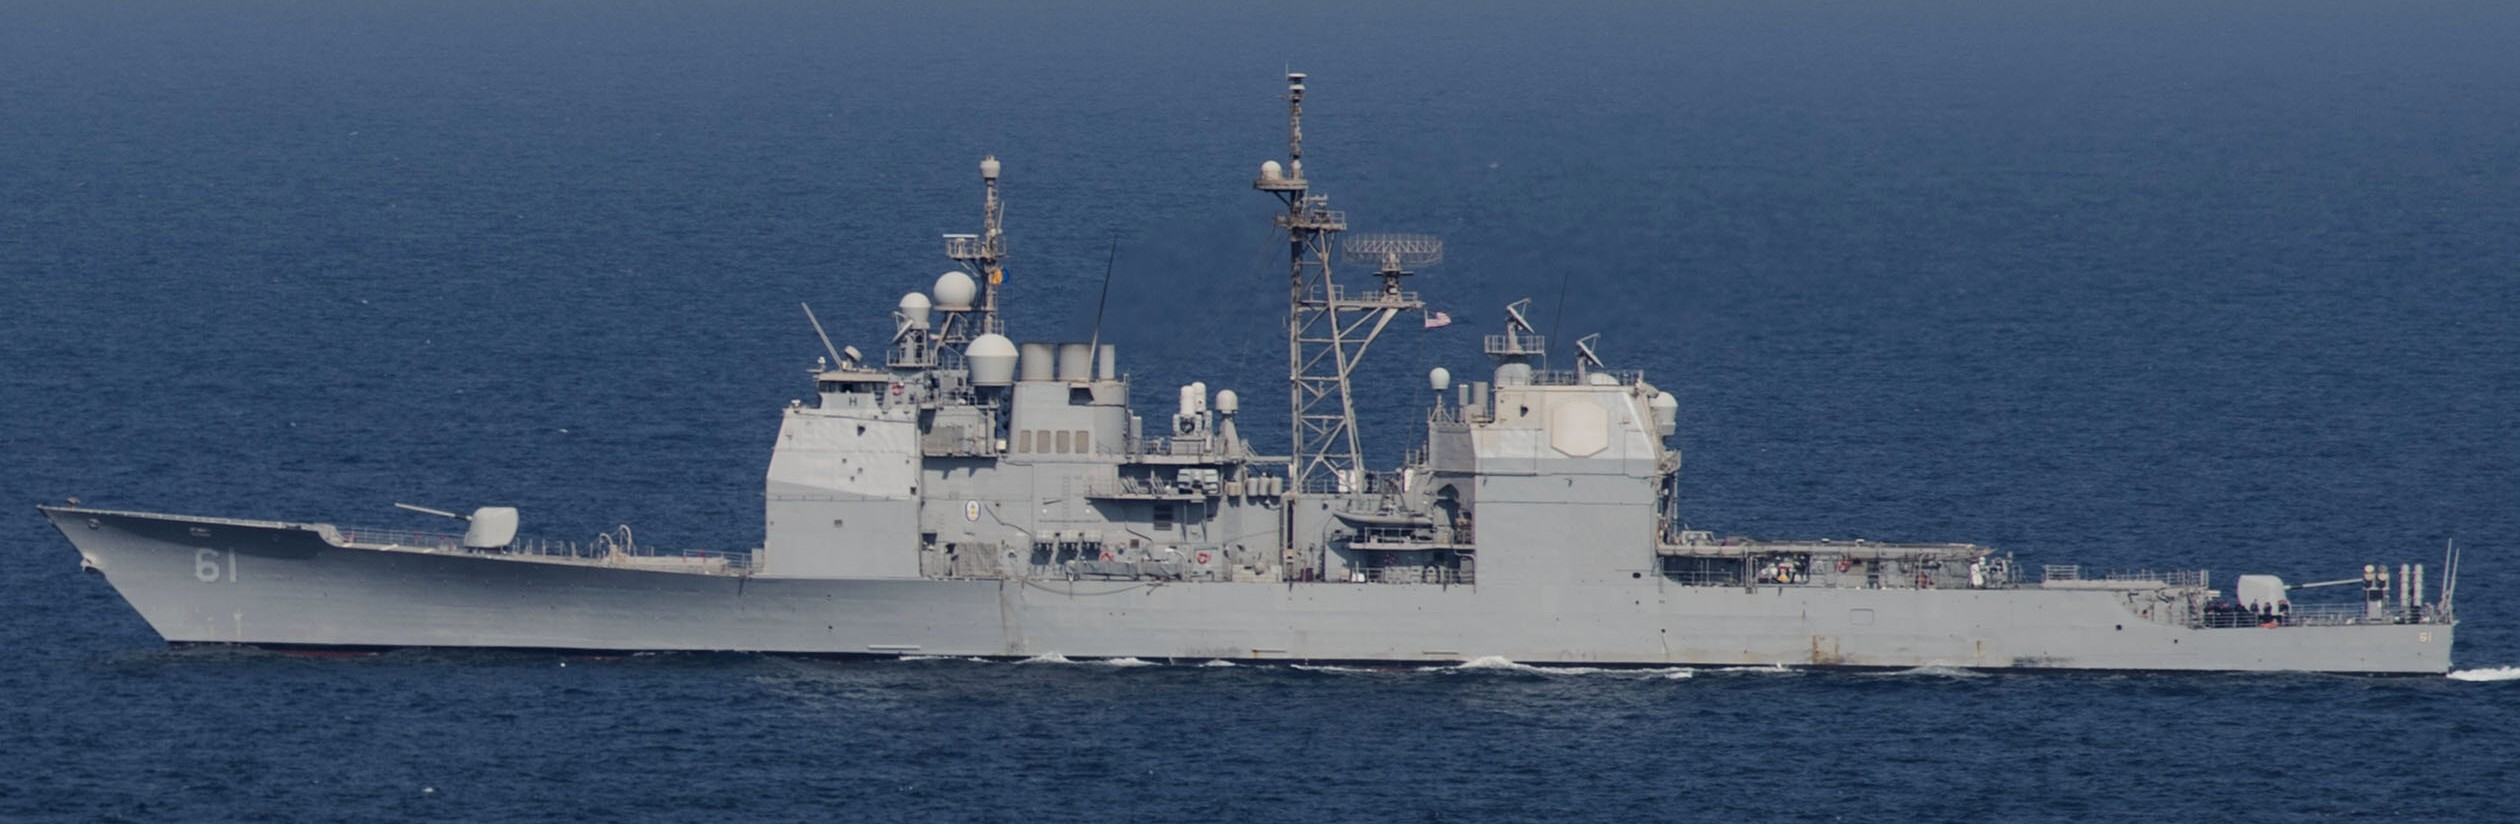 cg-61 uss monterey ticonderoga class guided missile cruiser aegis us navy arabian gulf 88